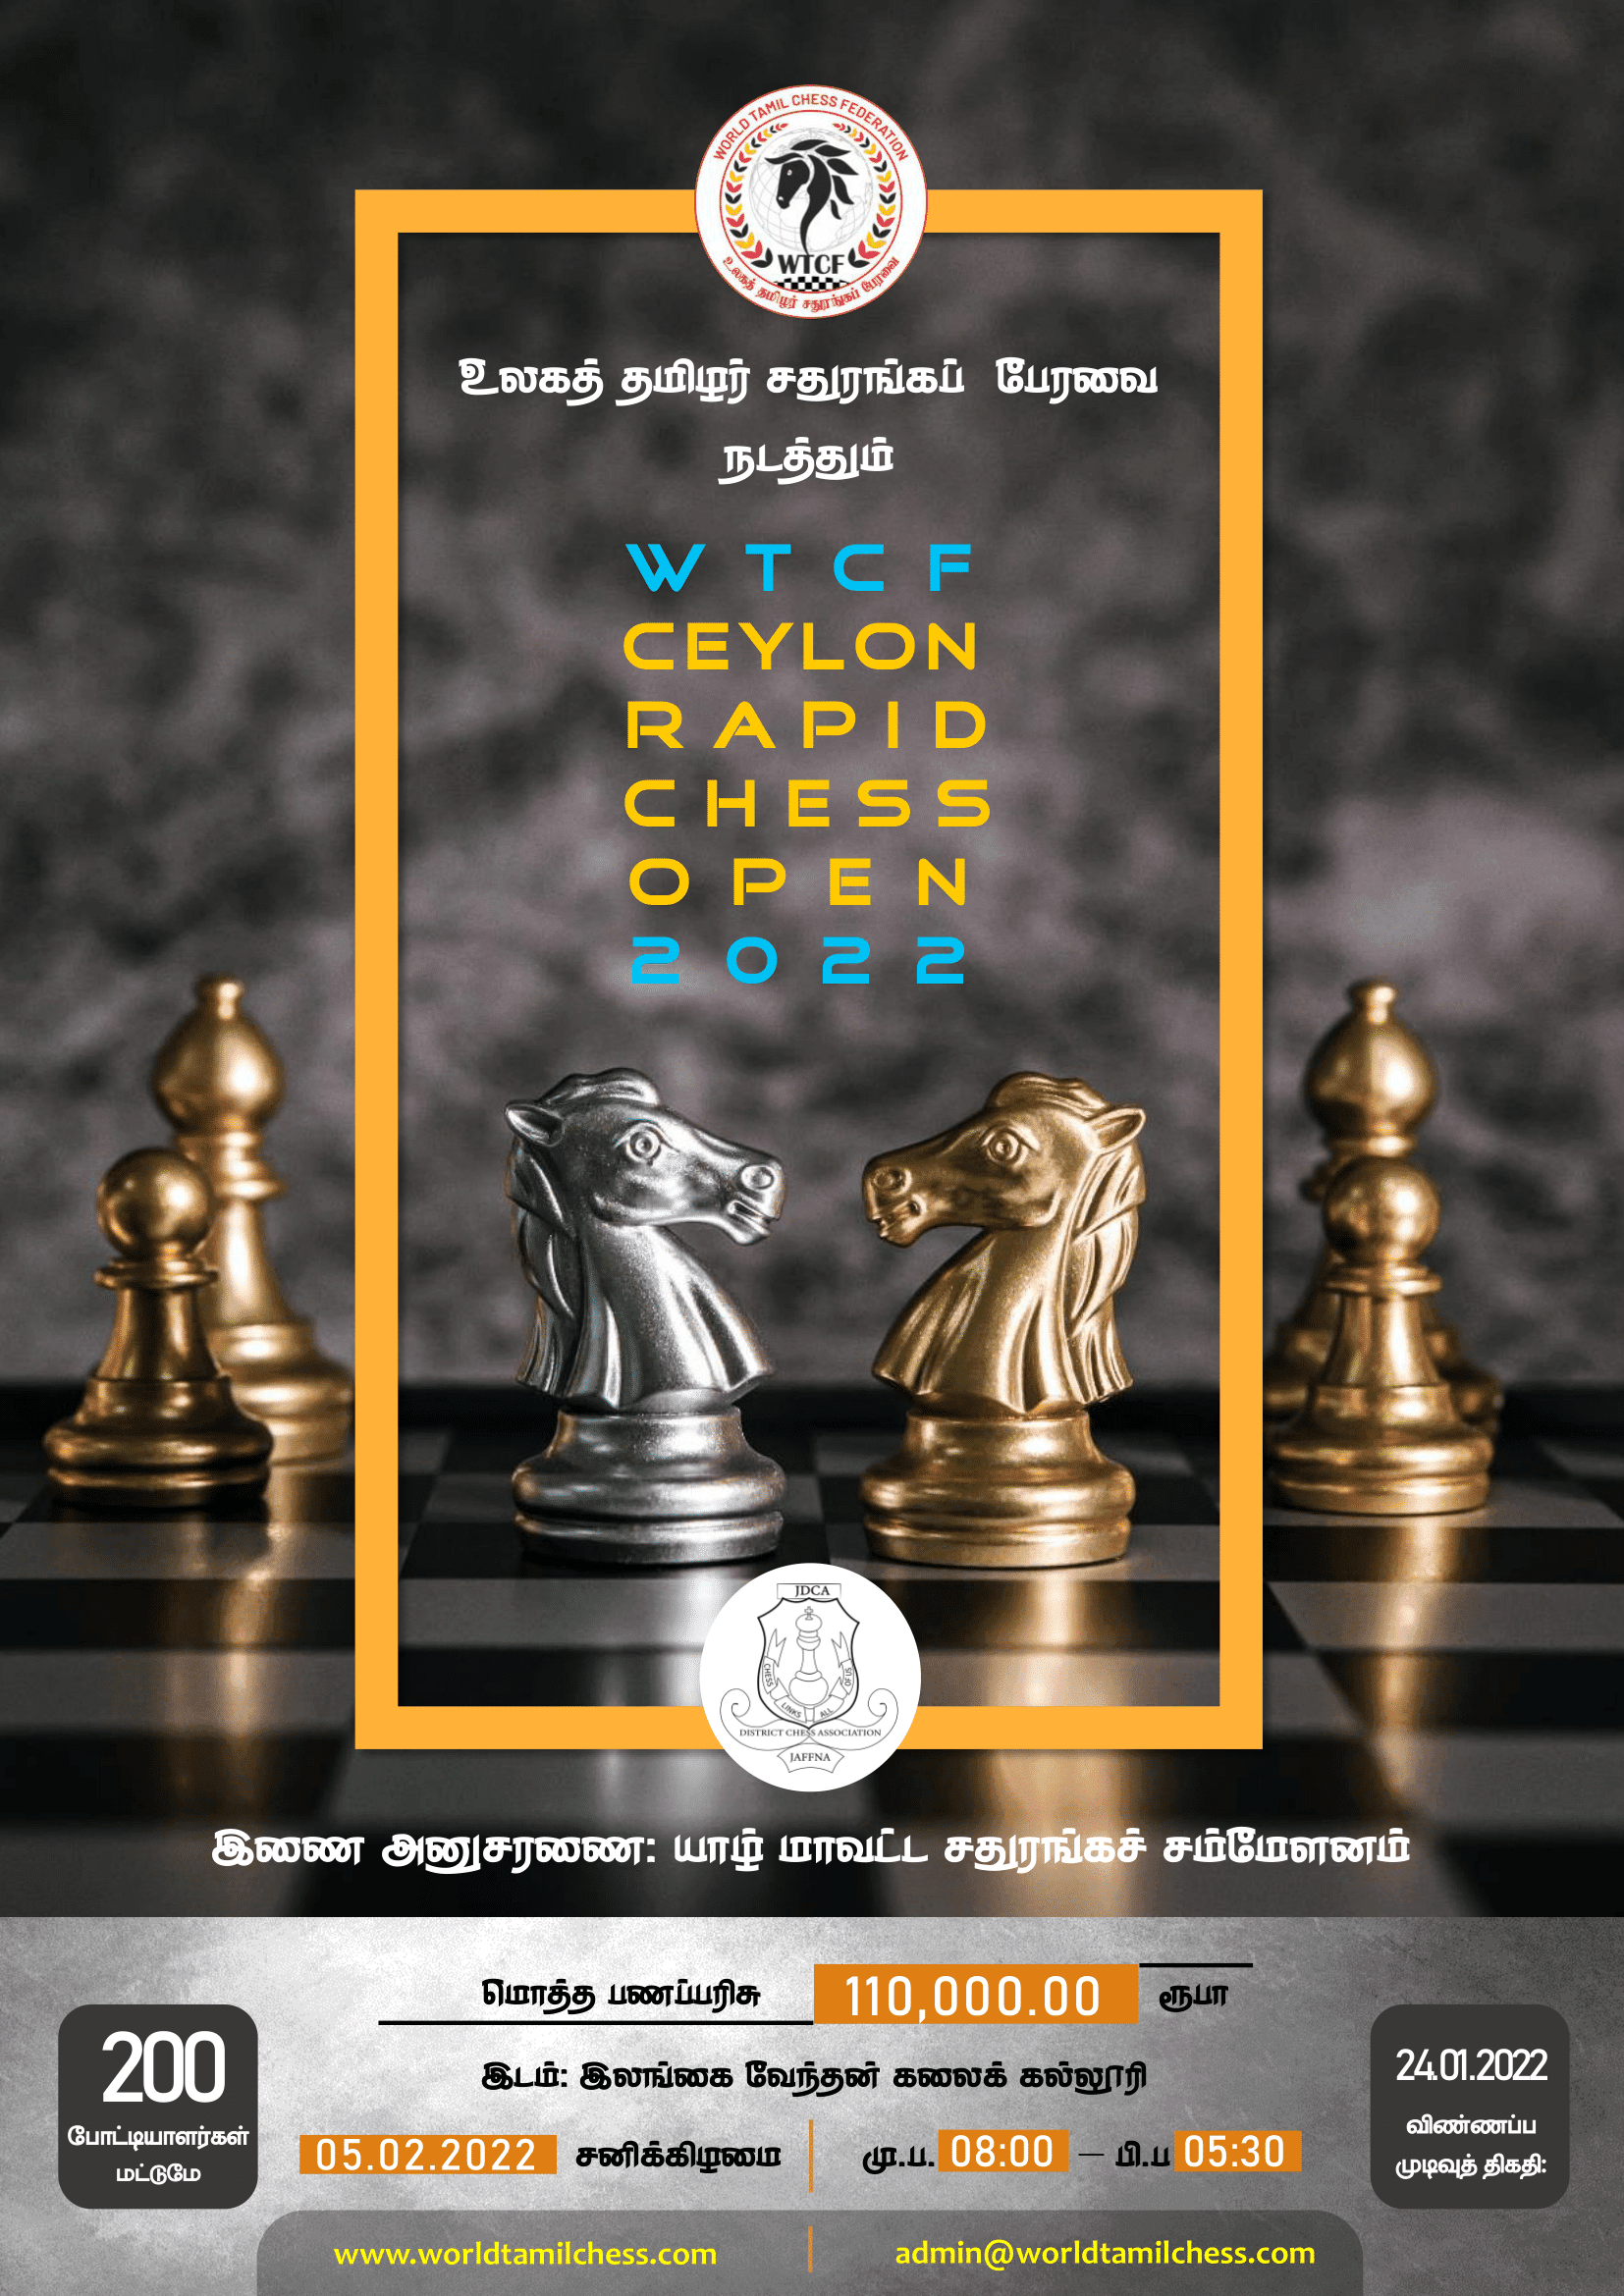 WTCF, Ceylon rapid chess open tournament 2022-02-05 flyer